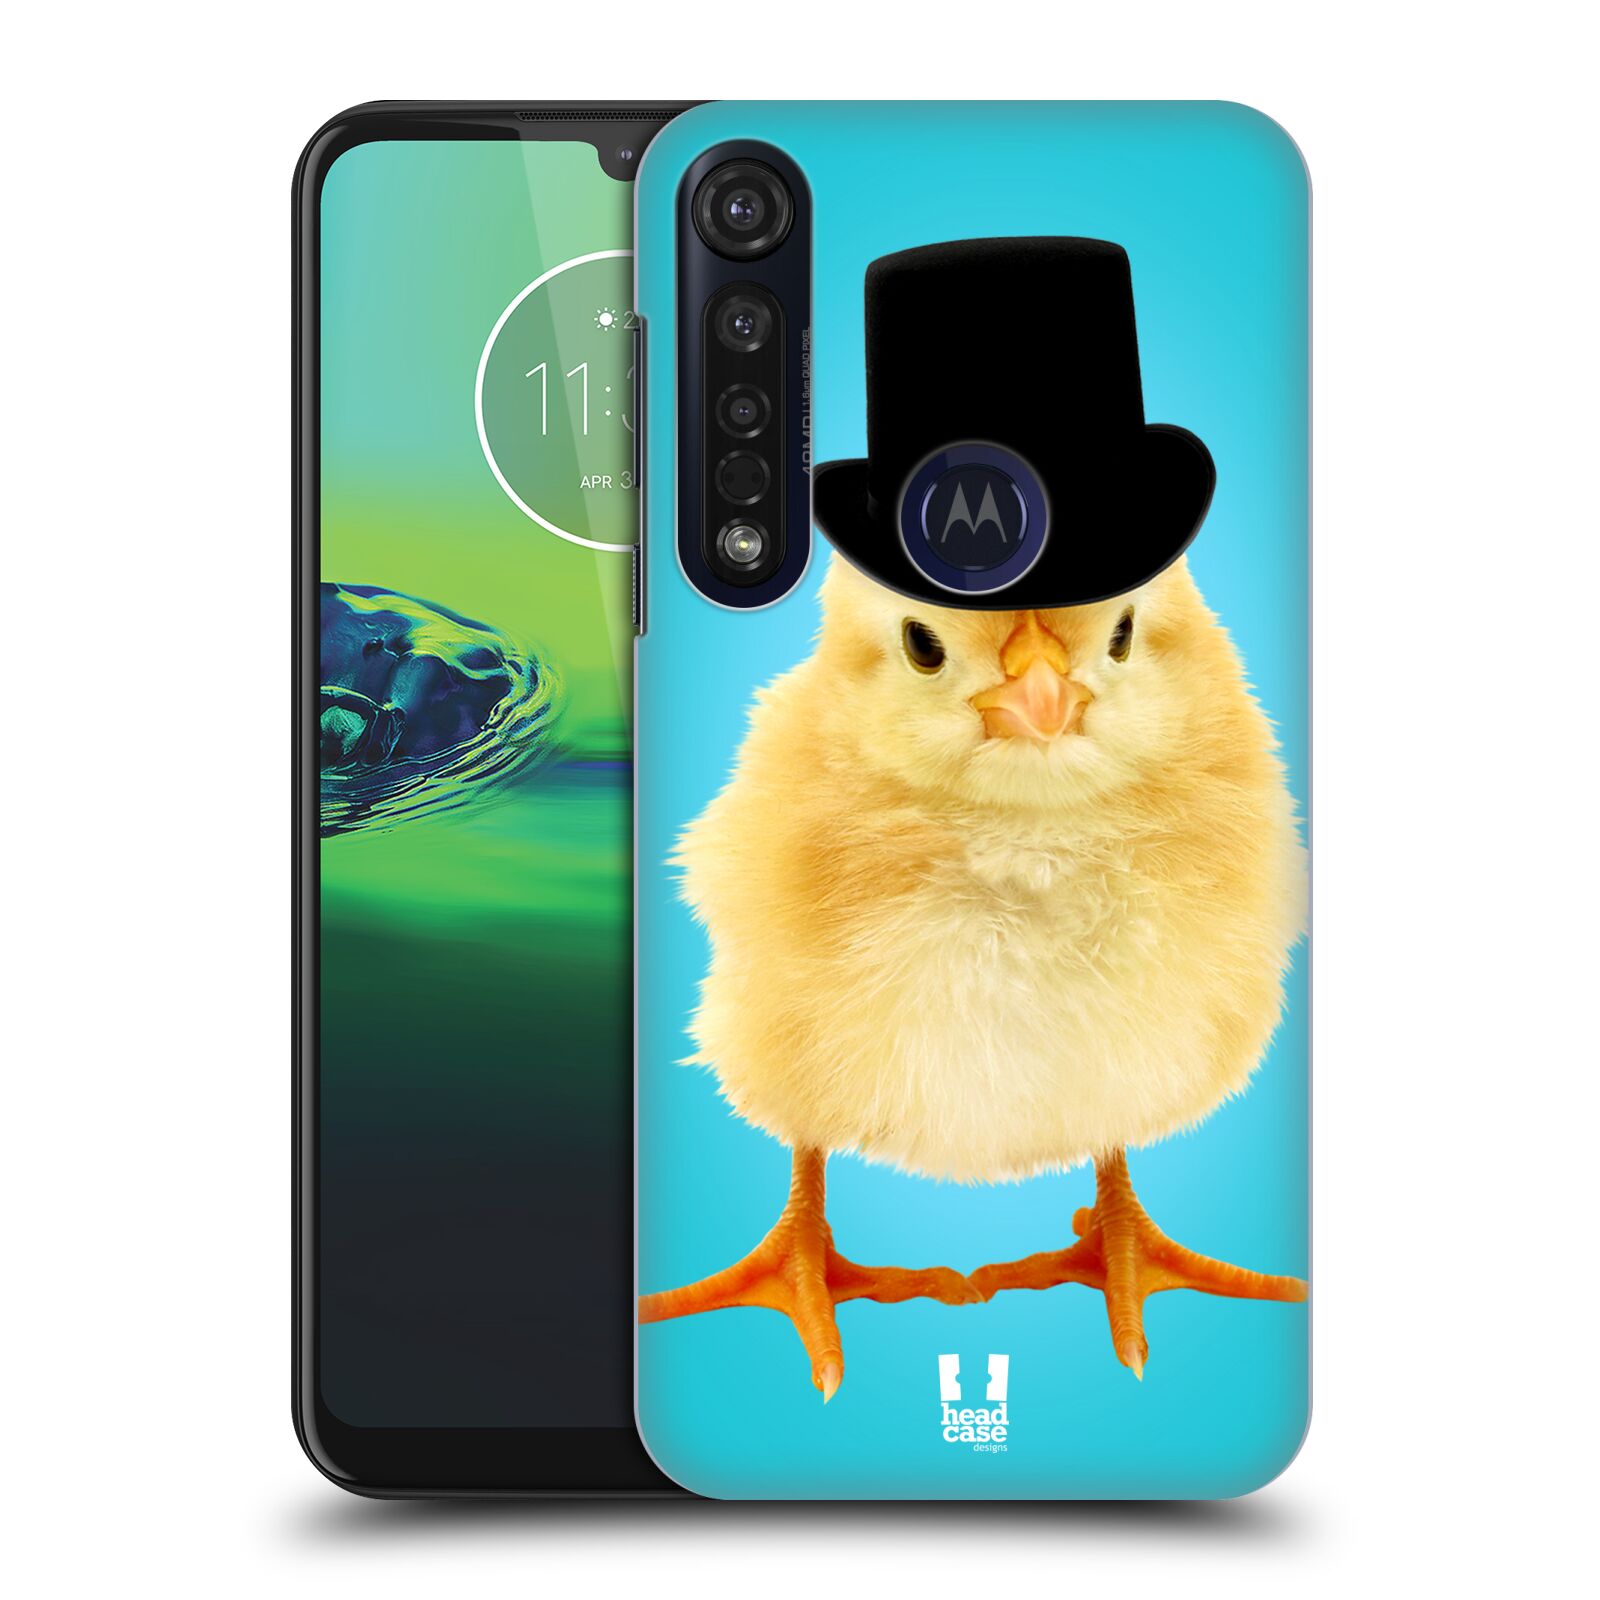 Pouzdro na mobil Motorola Moto G8 PLUS - HEAD CASE - vzor Legrační zvířátka Mr. kuřátko